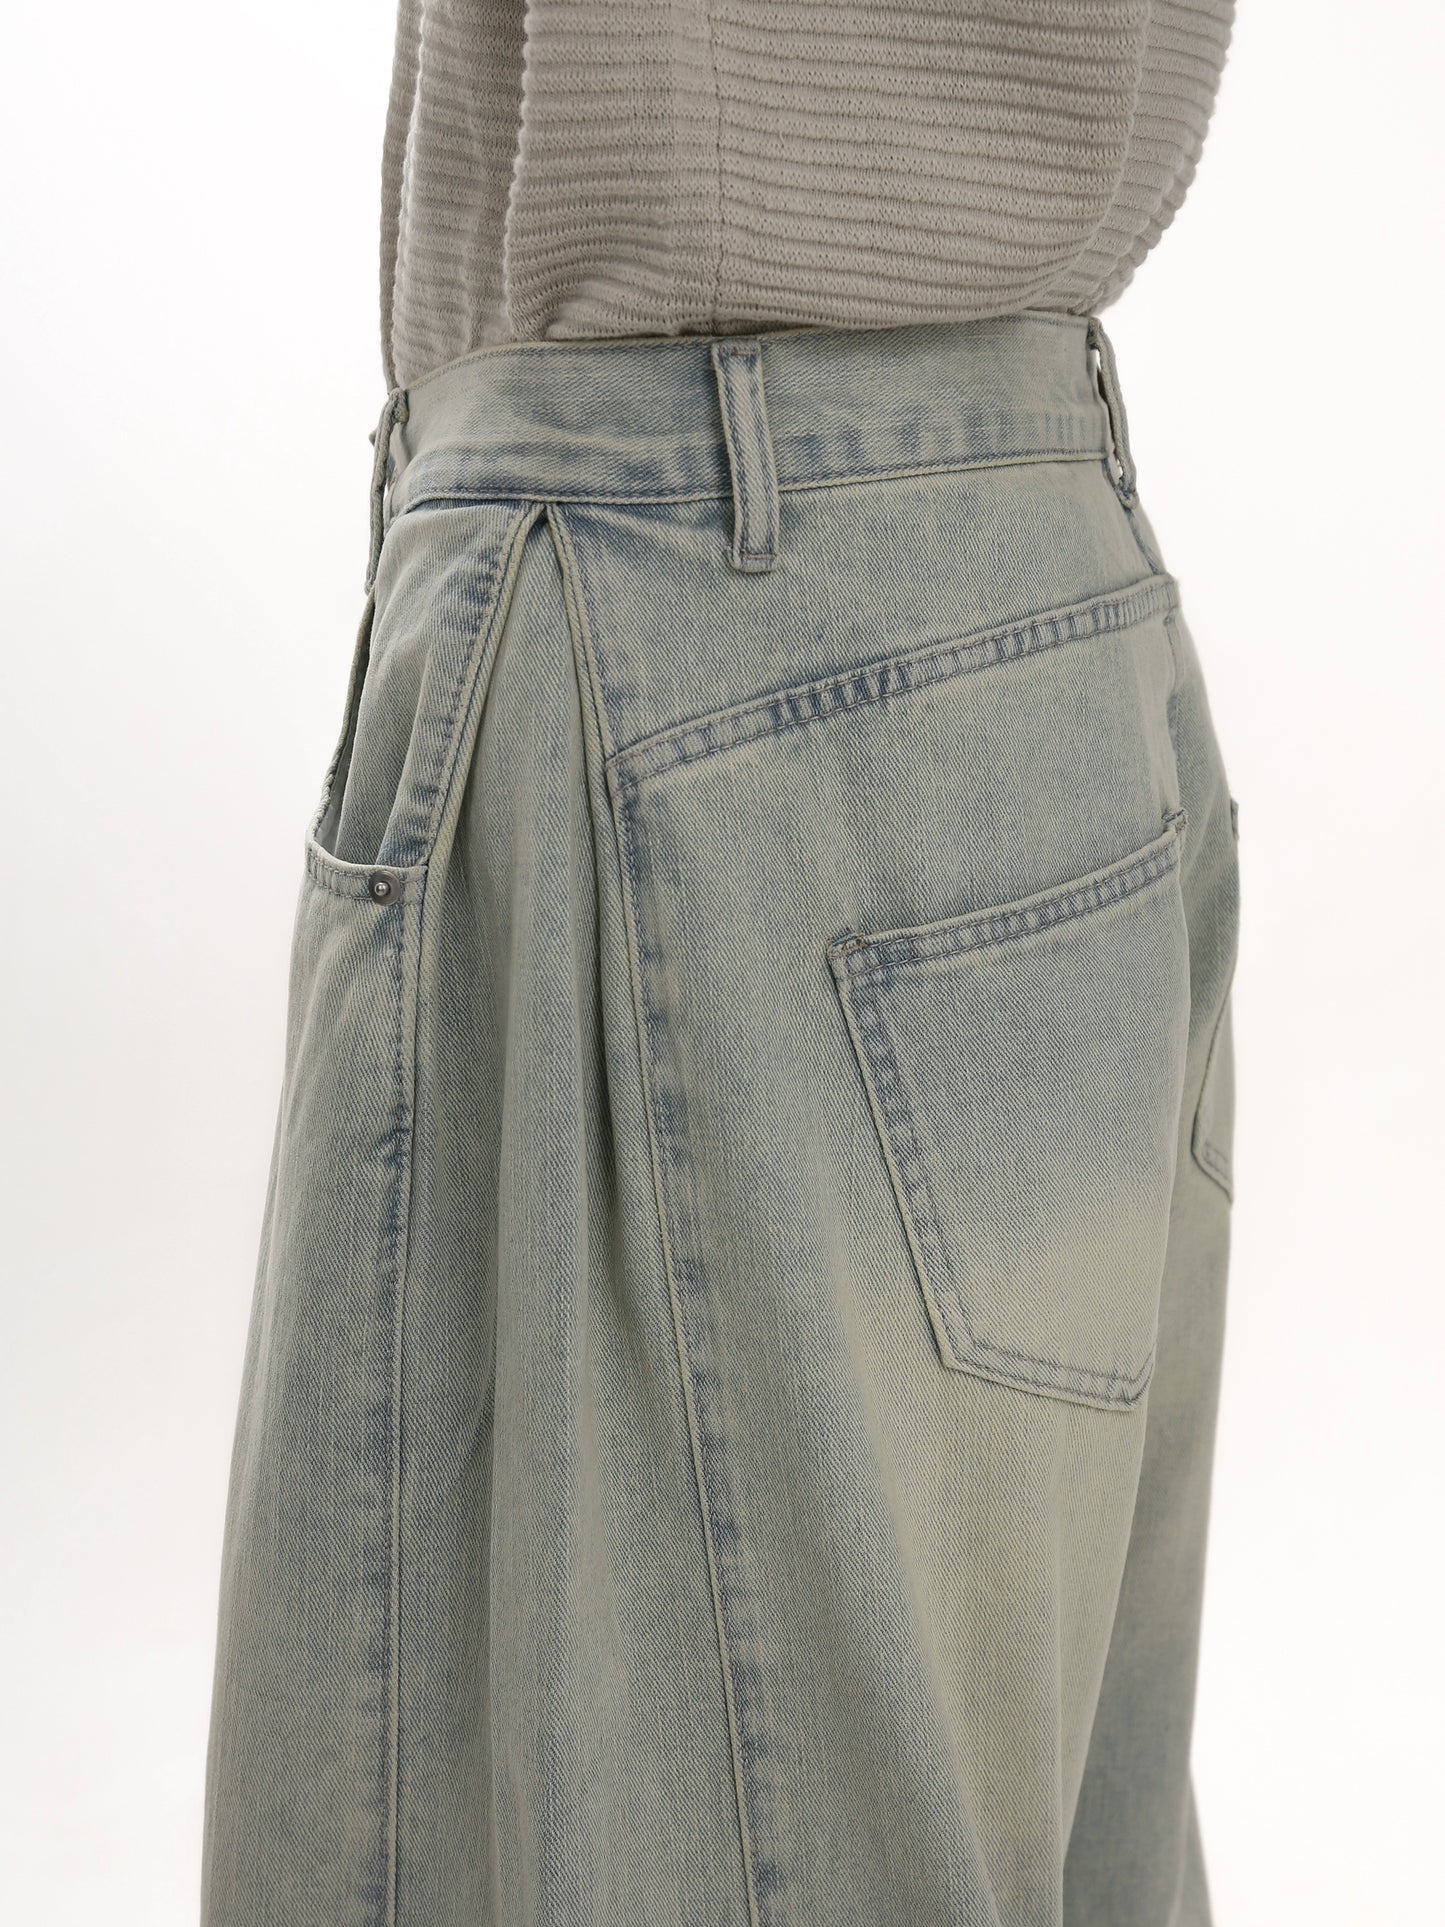 GIBBYCNA Spring/Summer New Vintage Jeans Men's American Loose Light Blue Slim Floor-Length Wide-leg Pants